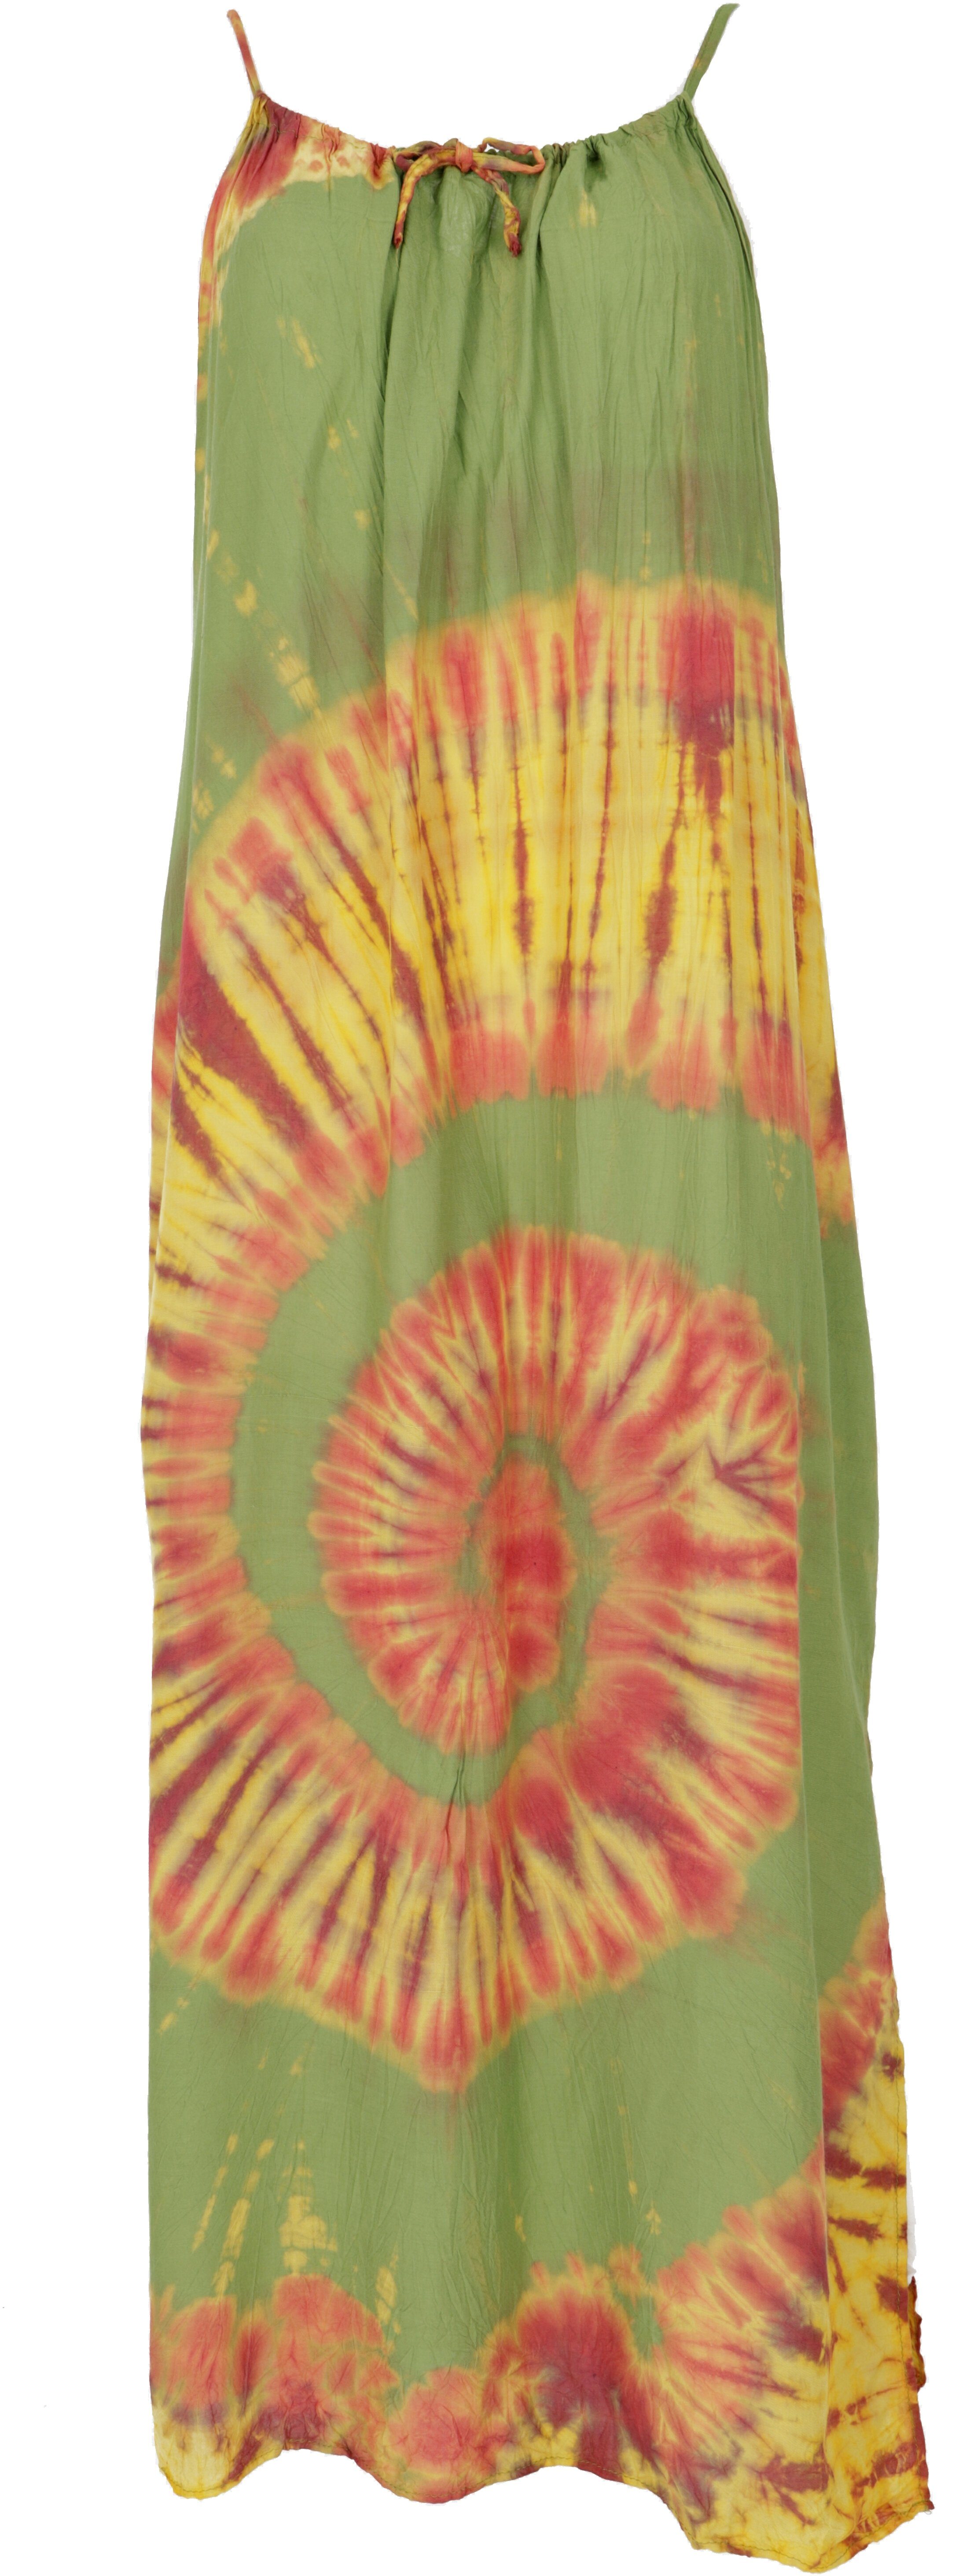 Guru-Shop Midikleid Batik alternative Trägerkleid,.. Bekleidung grün Hippiekleid, Sommerkleid